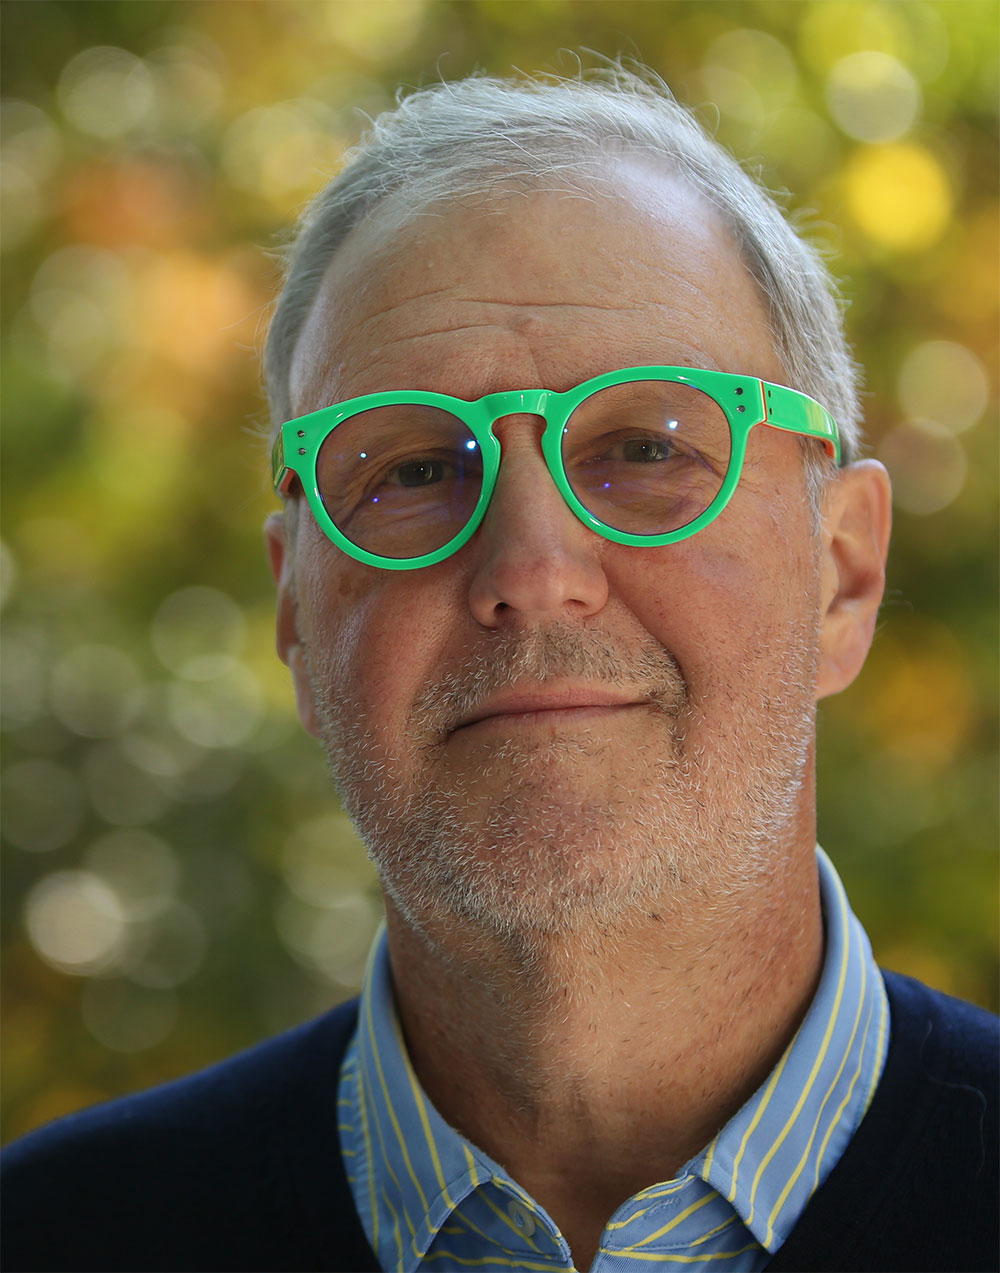 Albert Bartosic wearing green glasses and smiling